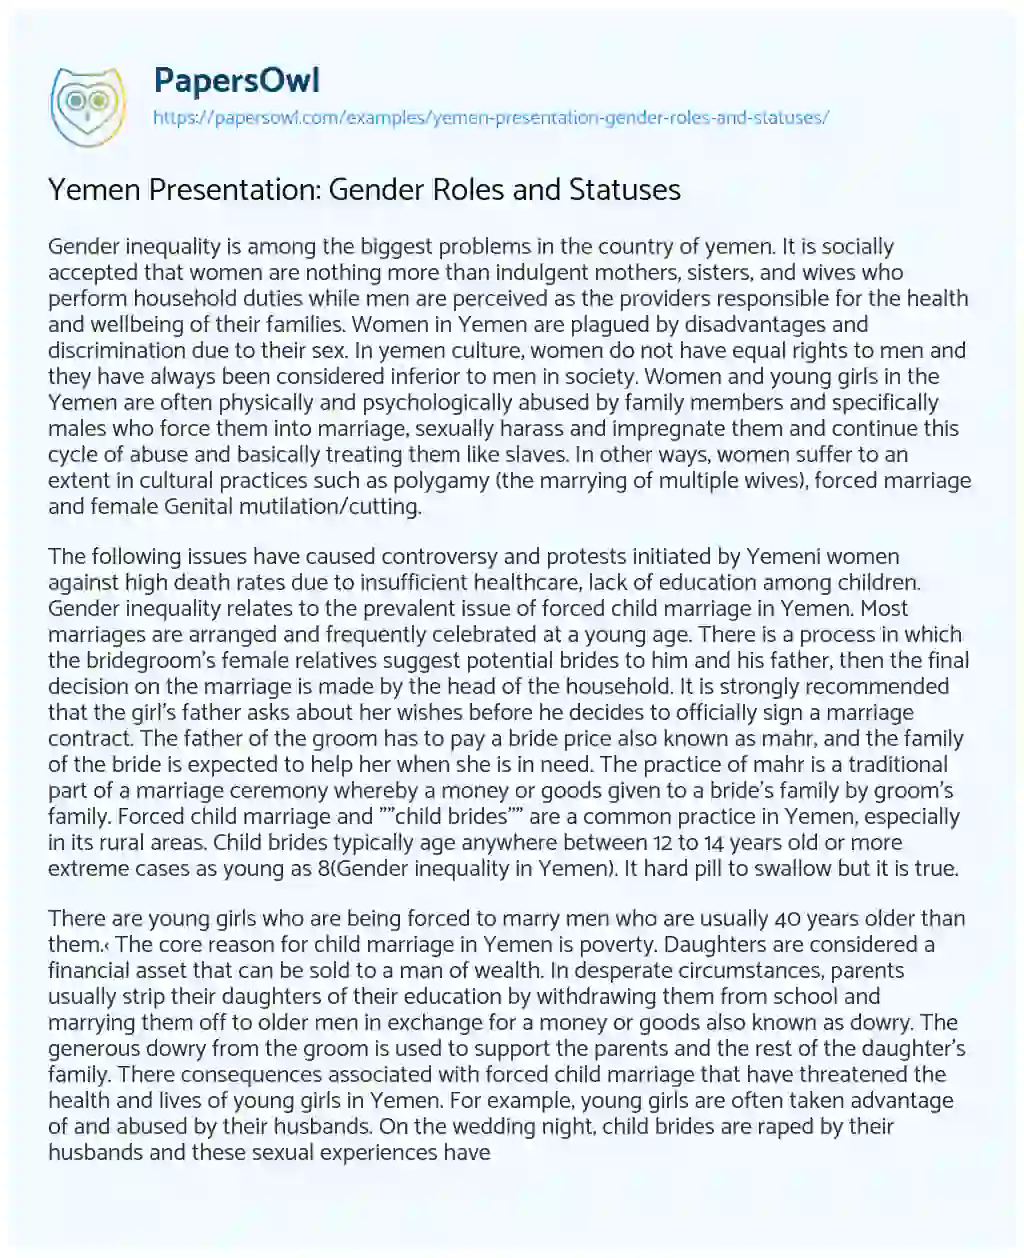 Essay on Yemen Presentation: Gender Roles and Statuses